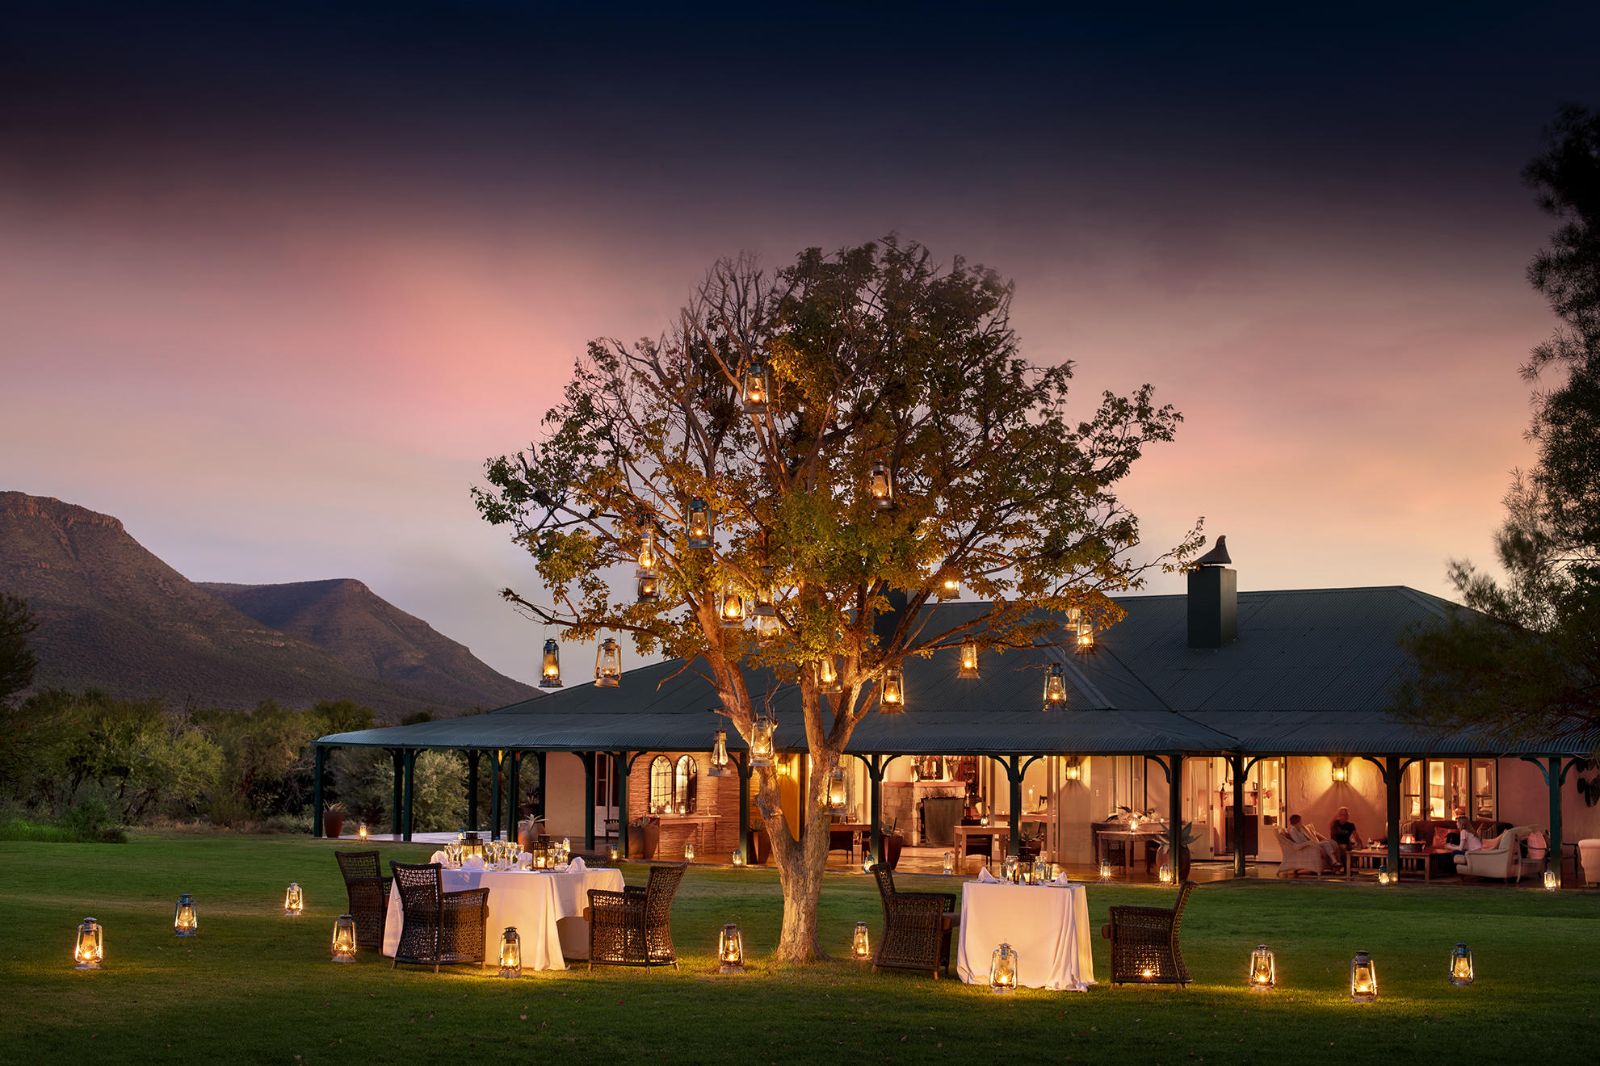 Outdoor dining at sunset at luxury safari lodge, Samara Karoo in South Africa.